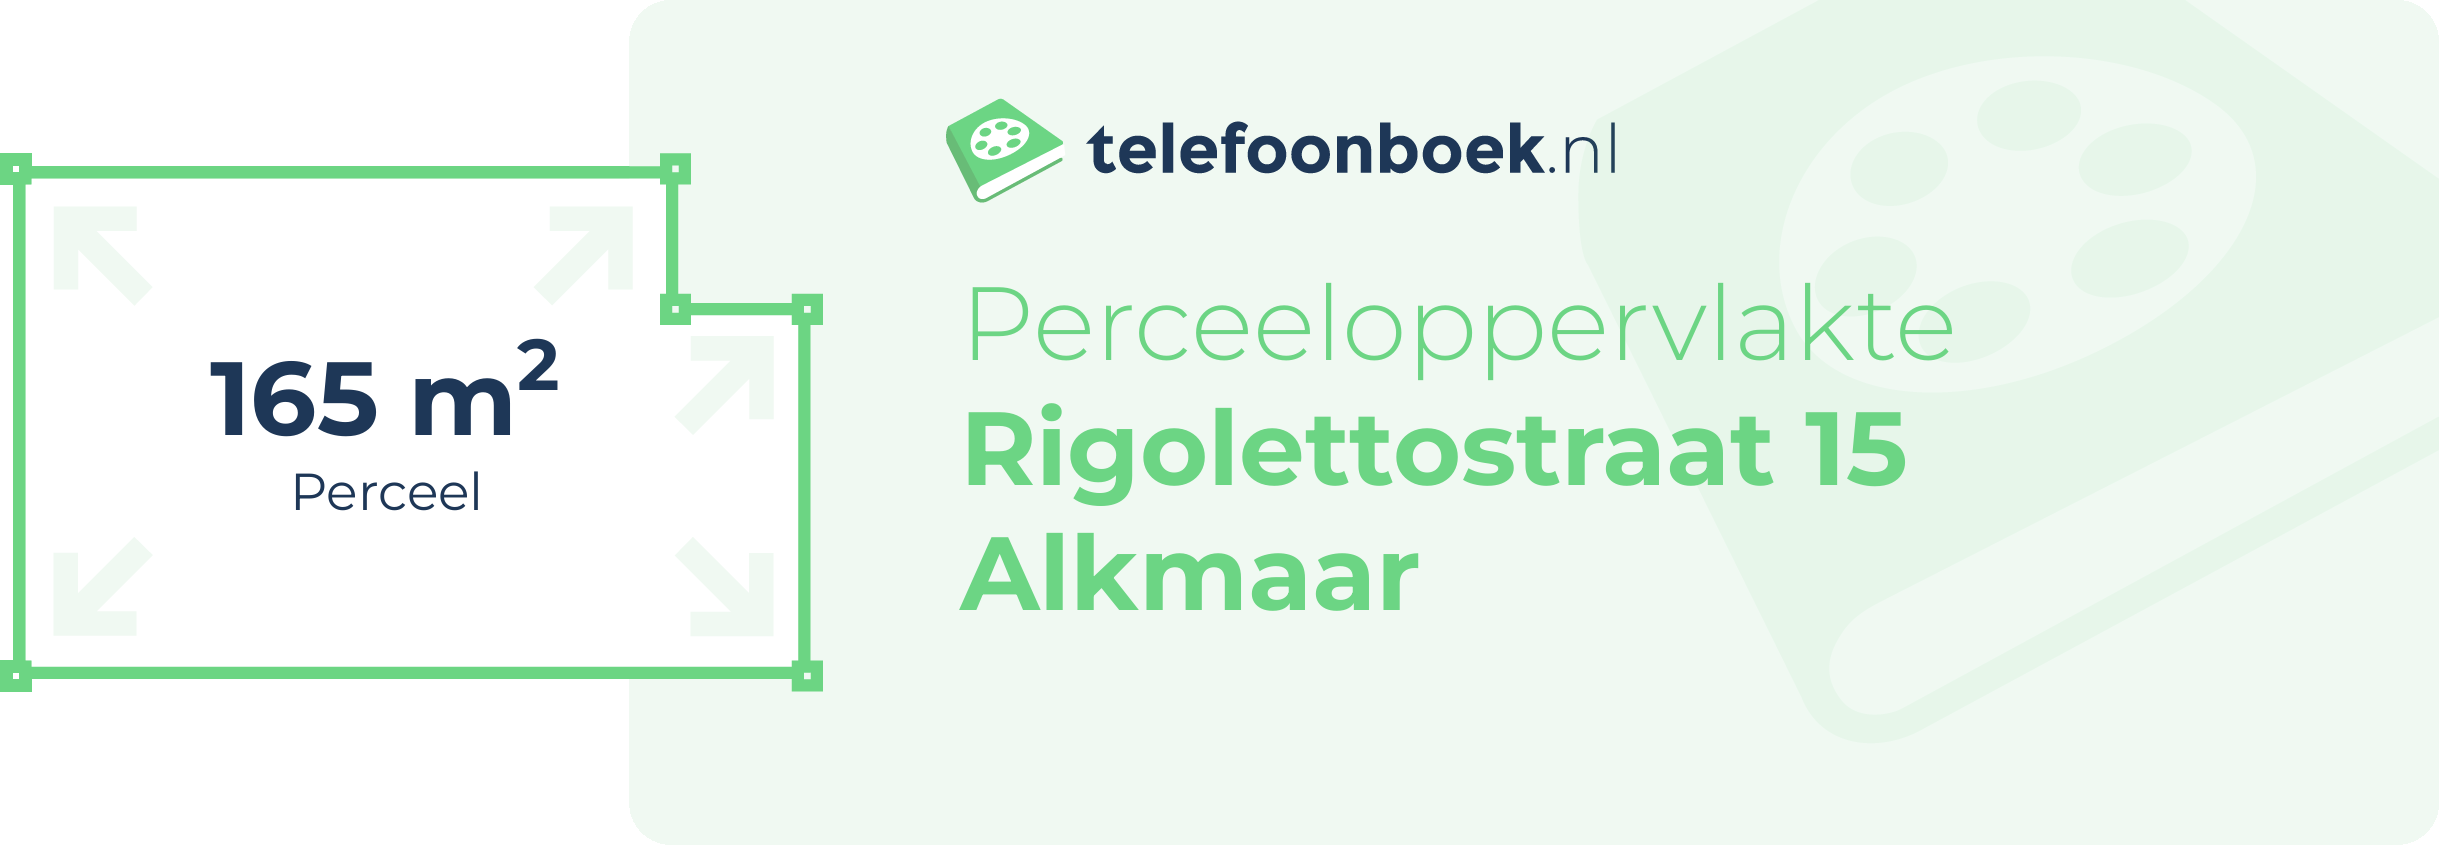 Perceeloppervlakte Rigolettostraat 15 Alkmaar